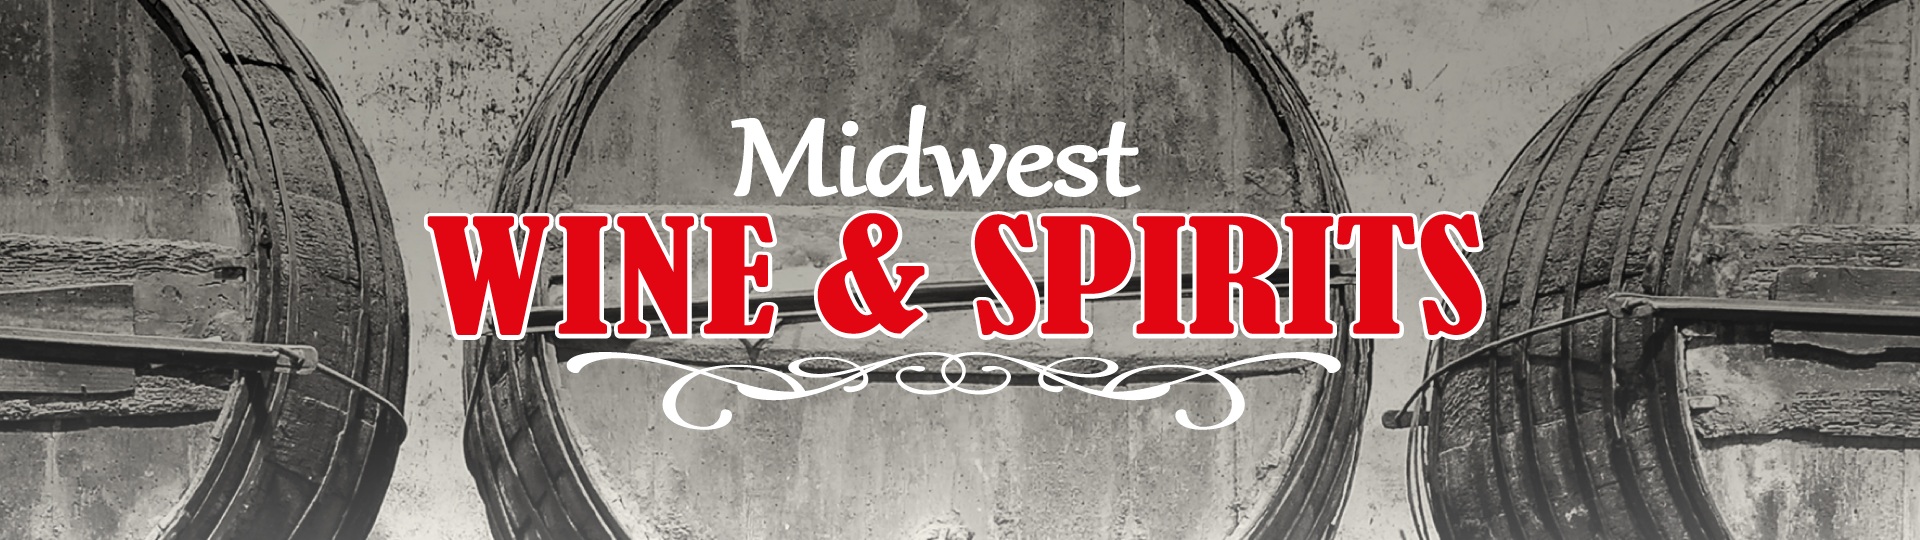 Midwest Wine & Spirits